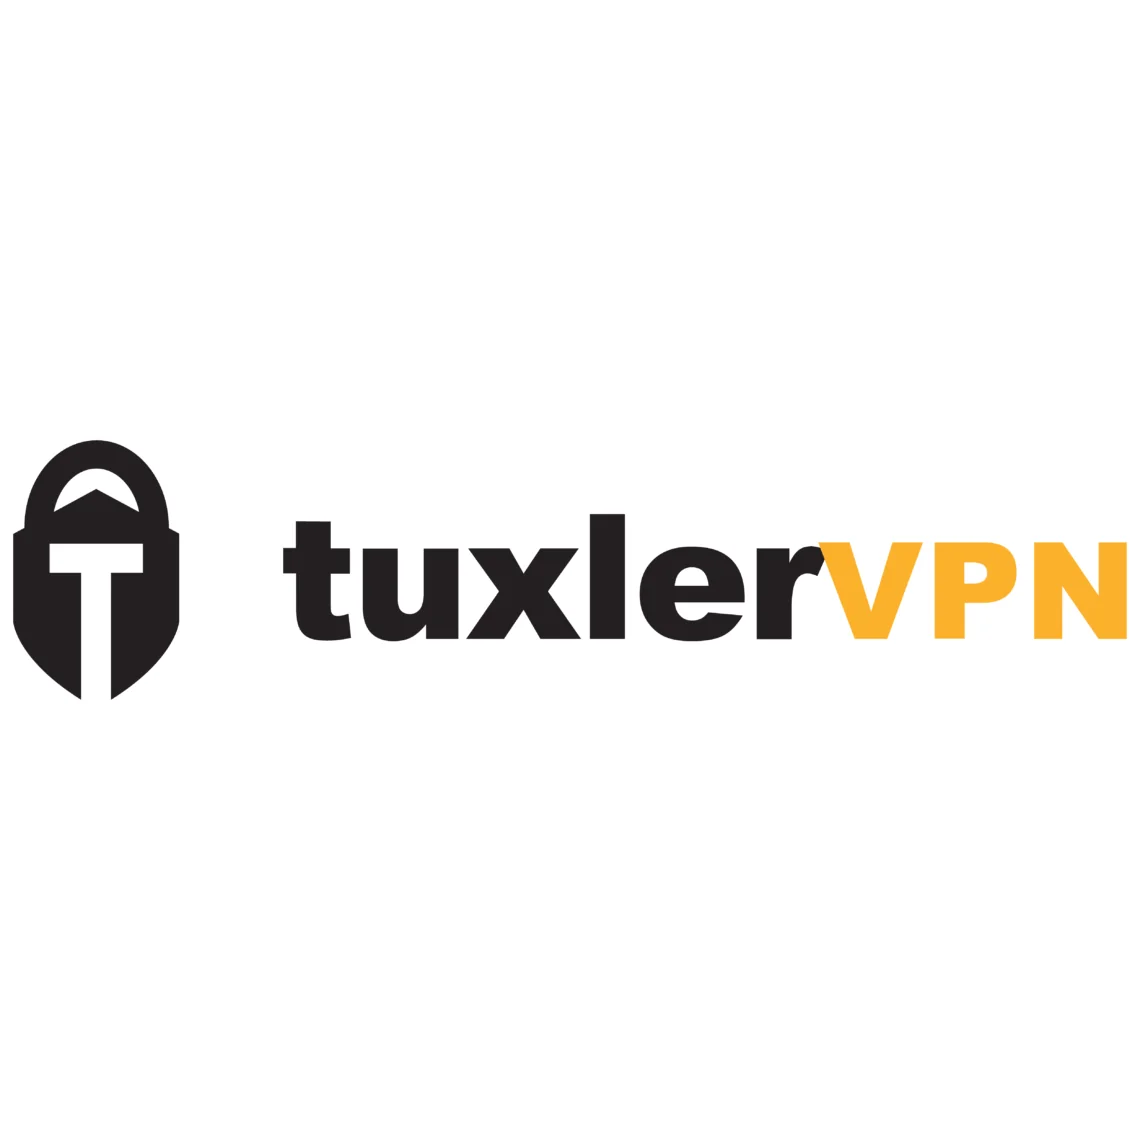 Tuxler VPN Logo